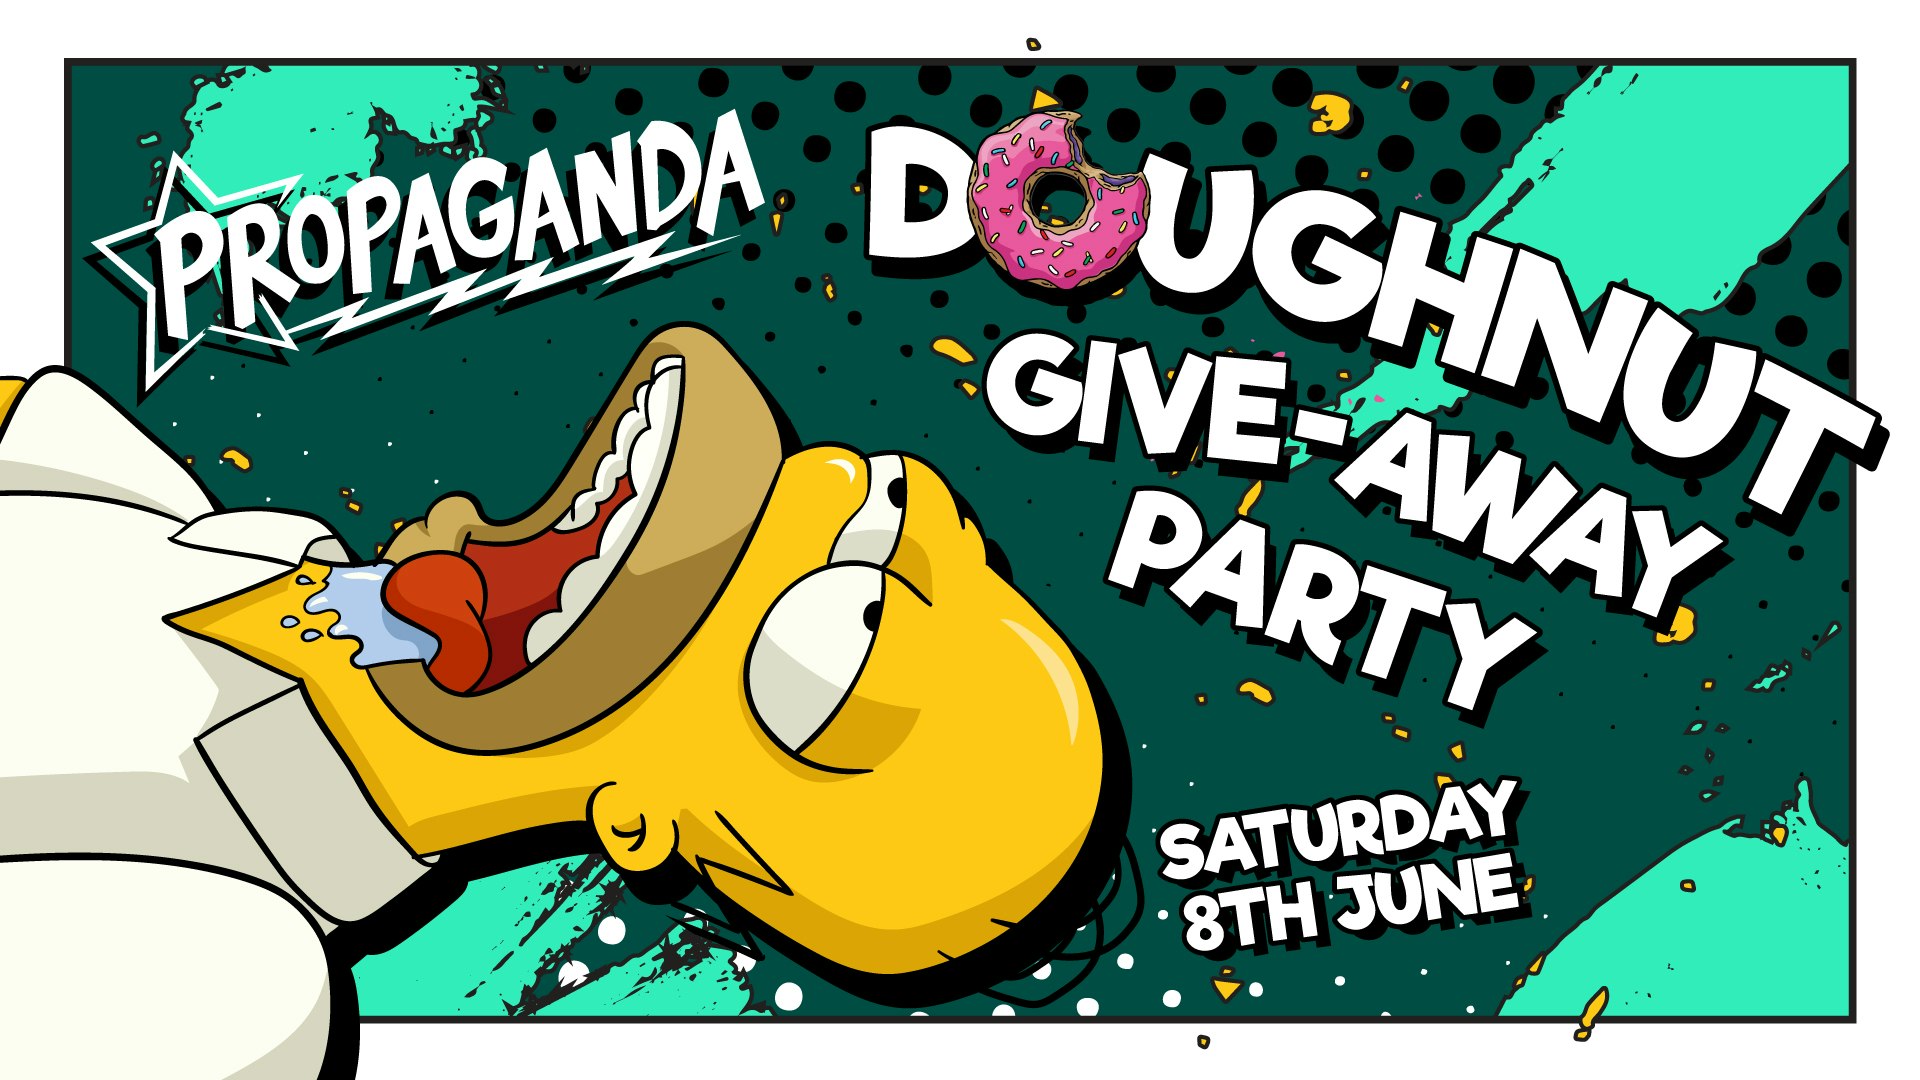 Propaganda London – Doughnut Party